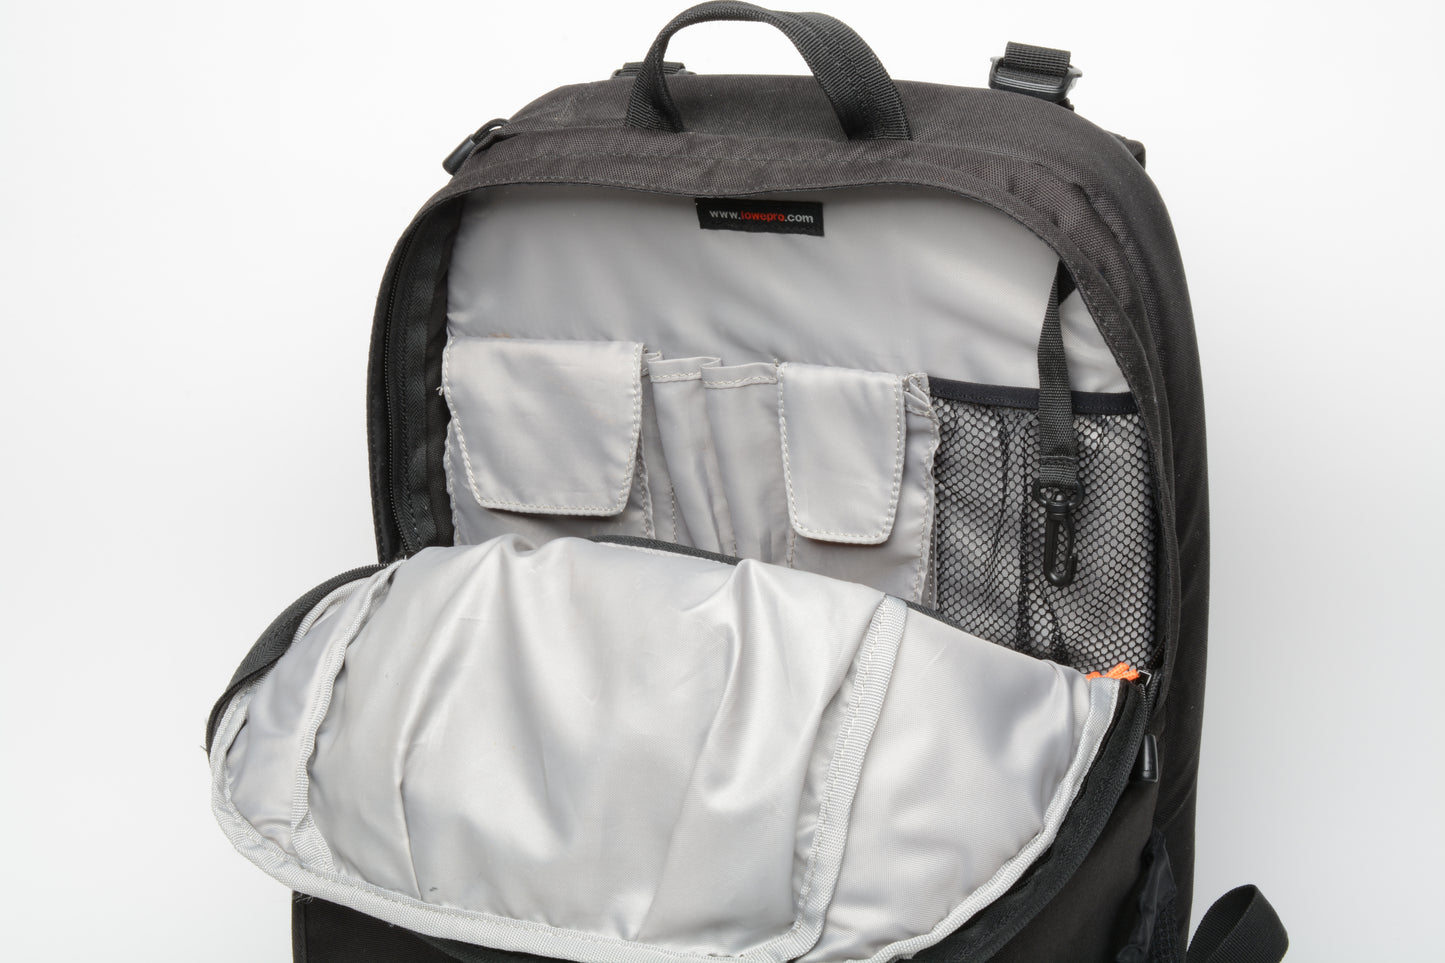 Lowepro Fastpack 350 Large Camera Backpack - Black - Very clean!